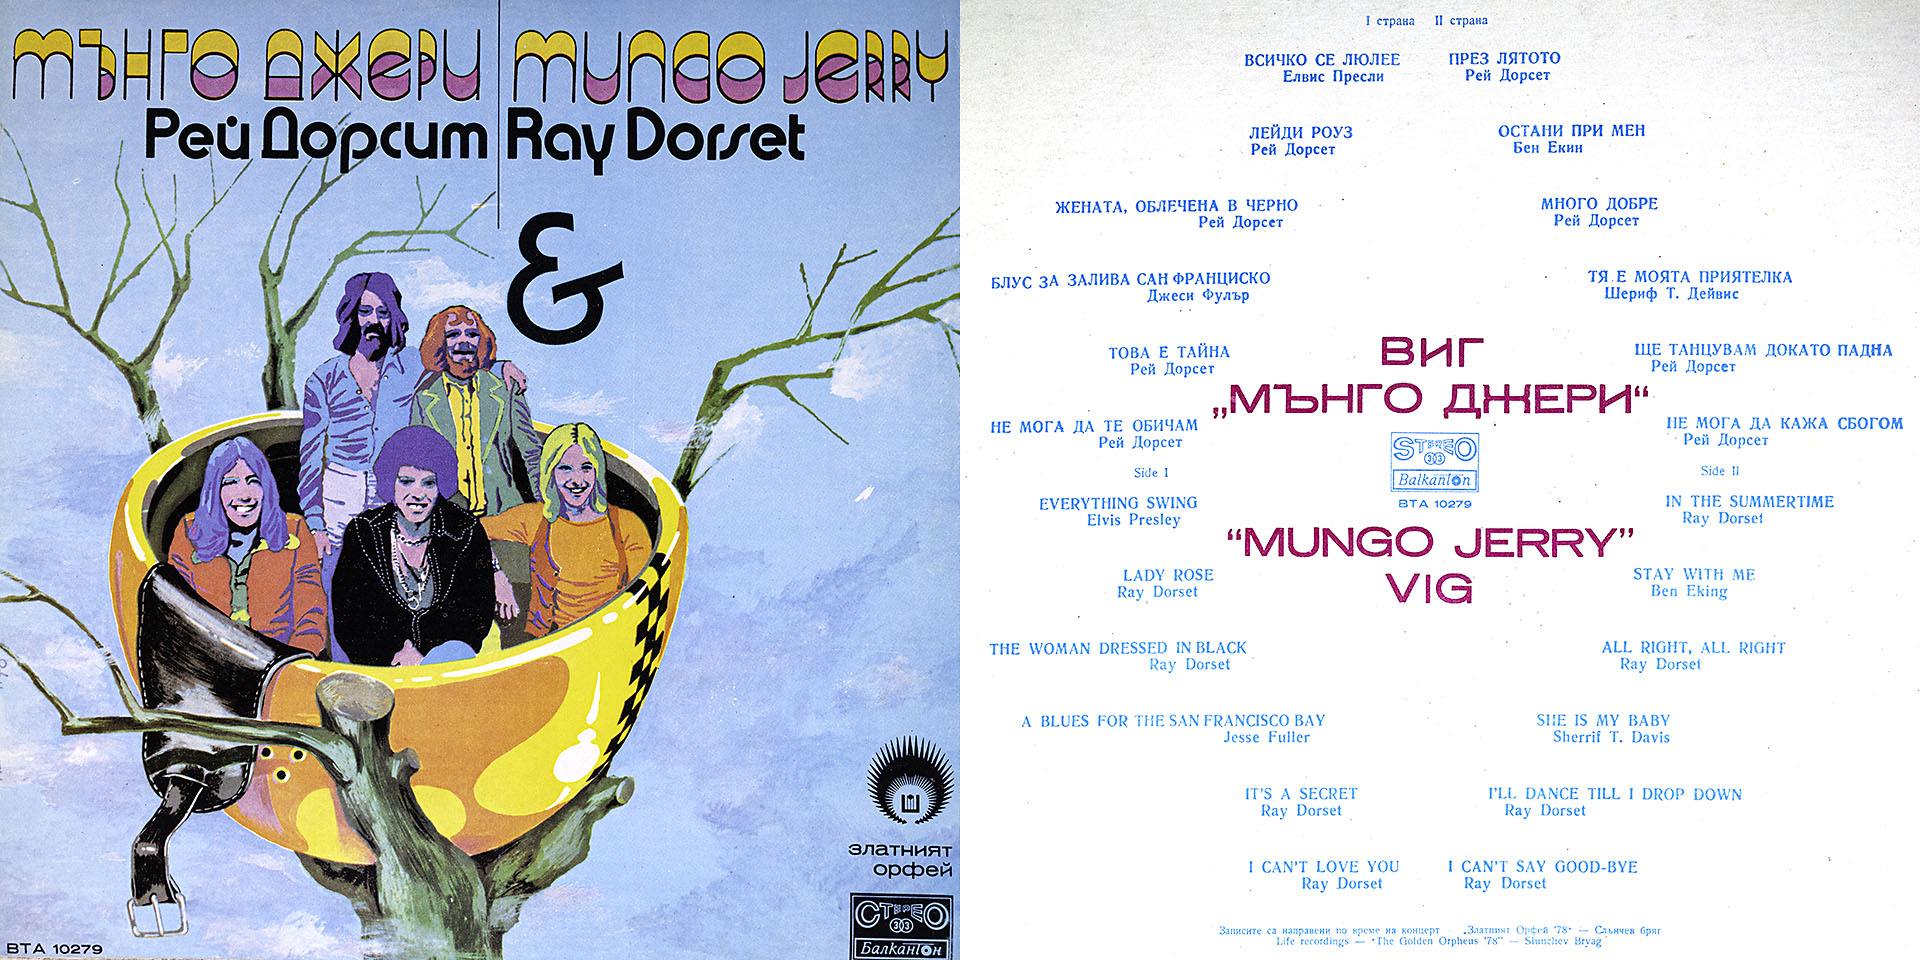 Mungo Jerry Vig - Elvis Presley / Ray Dorset / Ben Eking u. v. a. m.